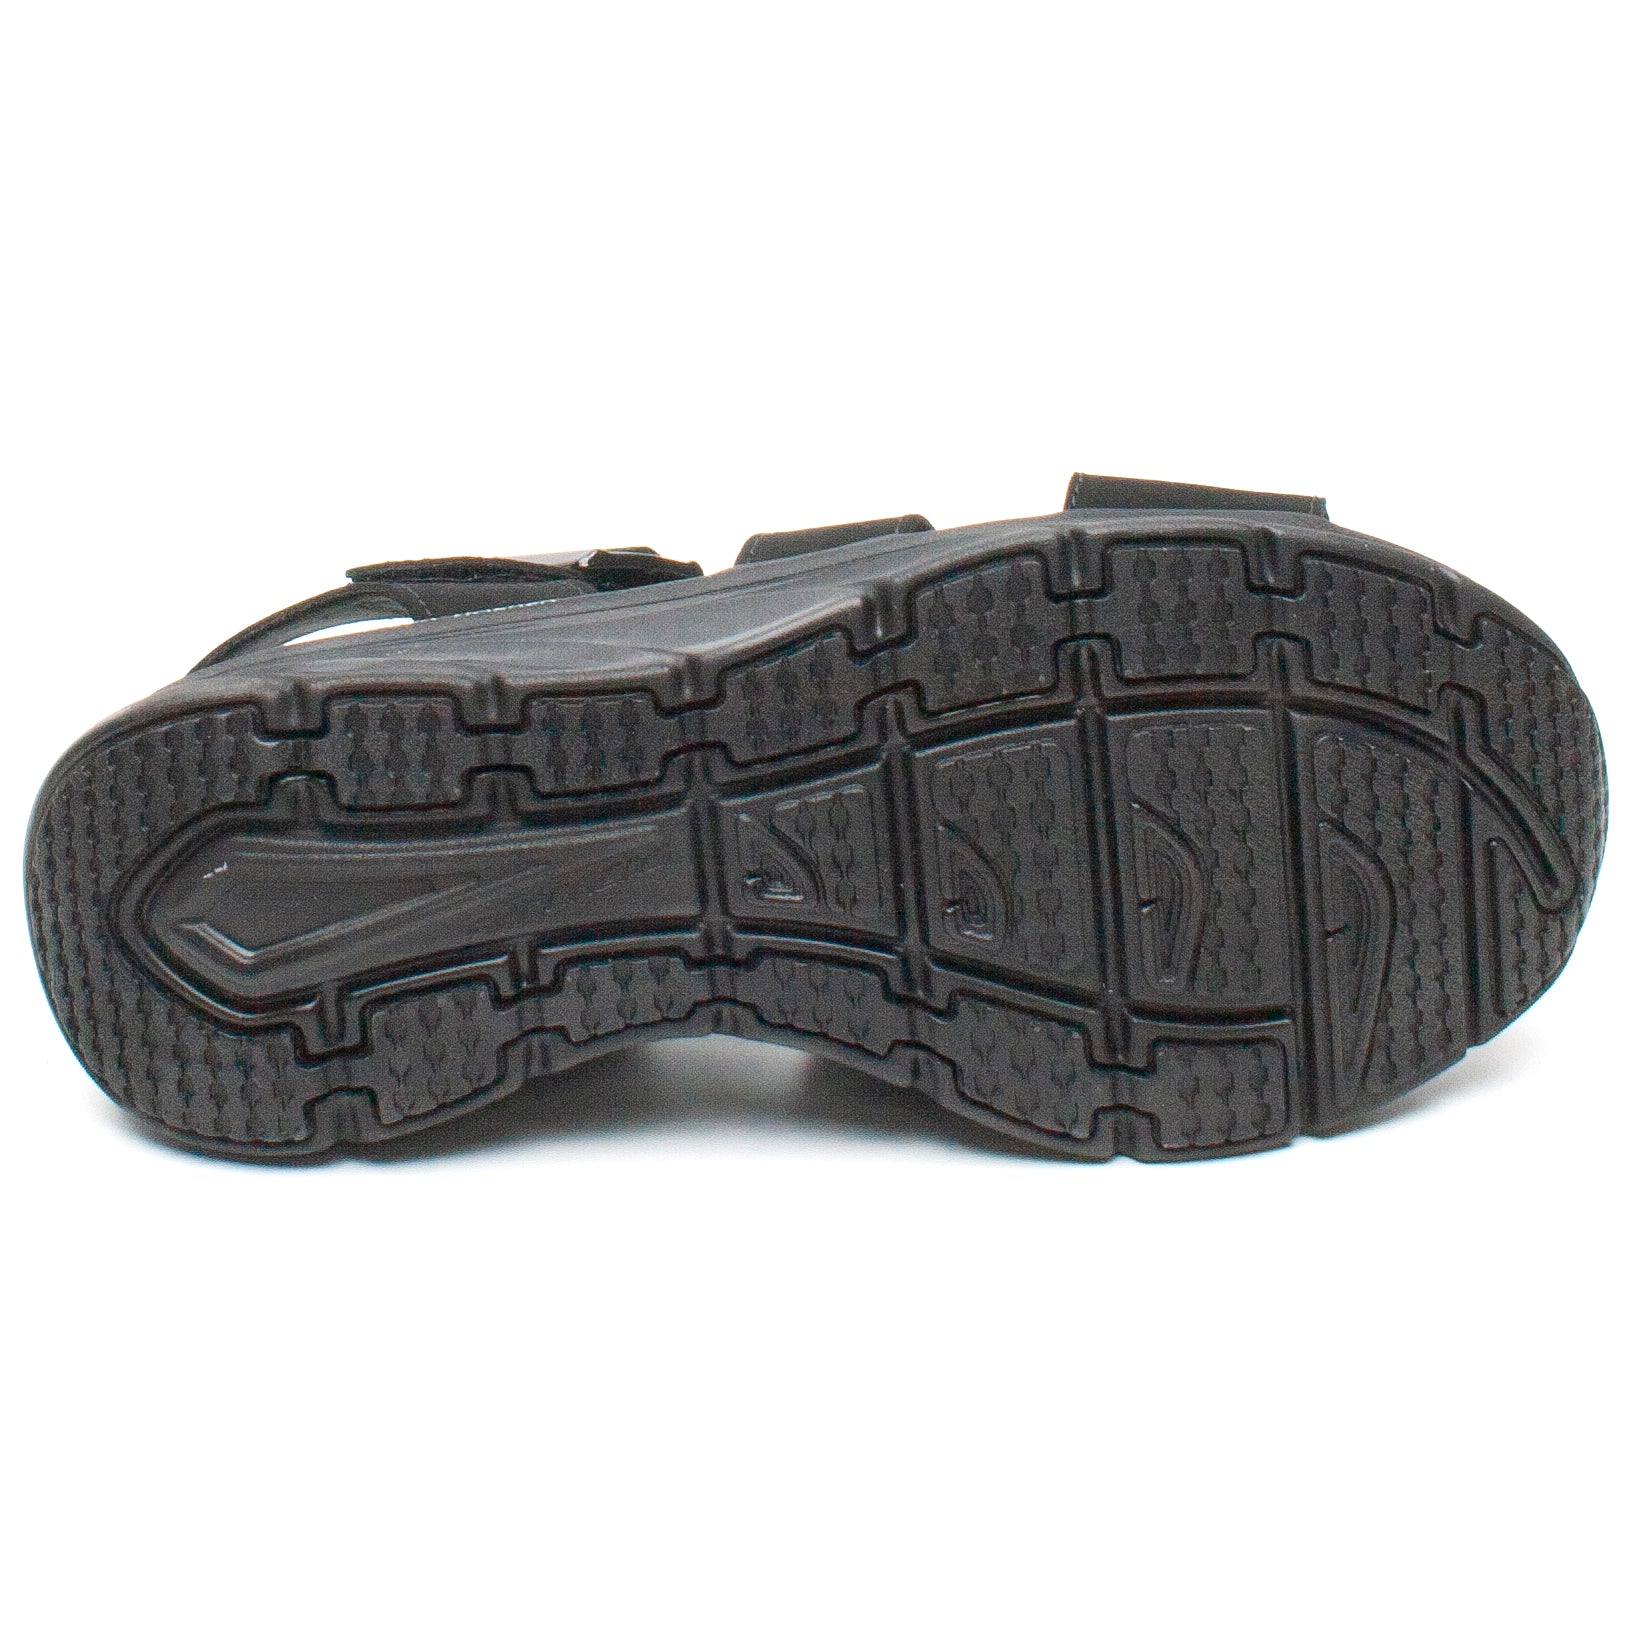 Skechers sandale dama 119234 negru ID2998-NG